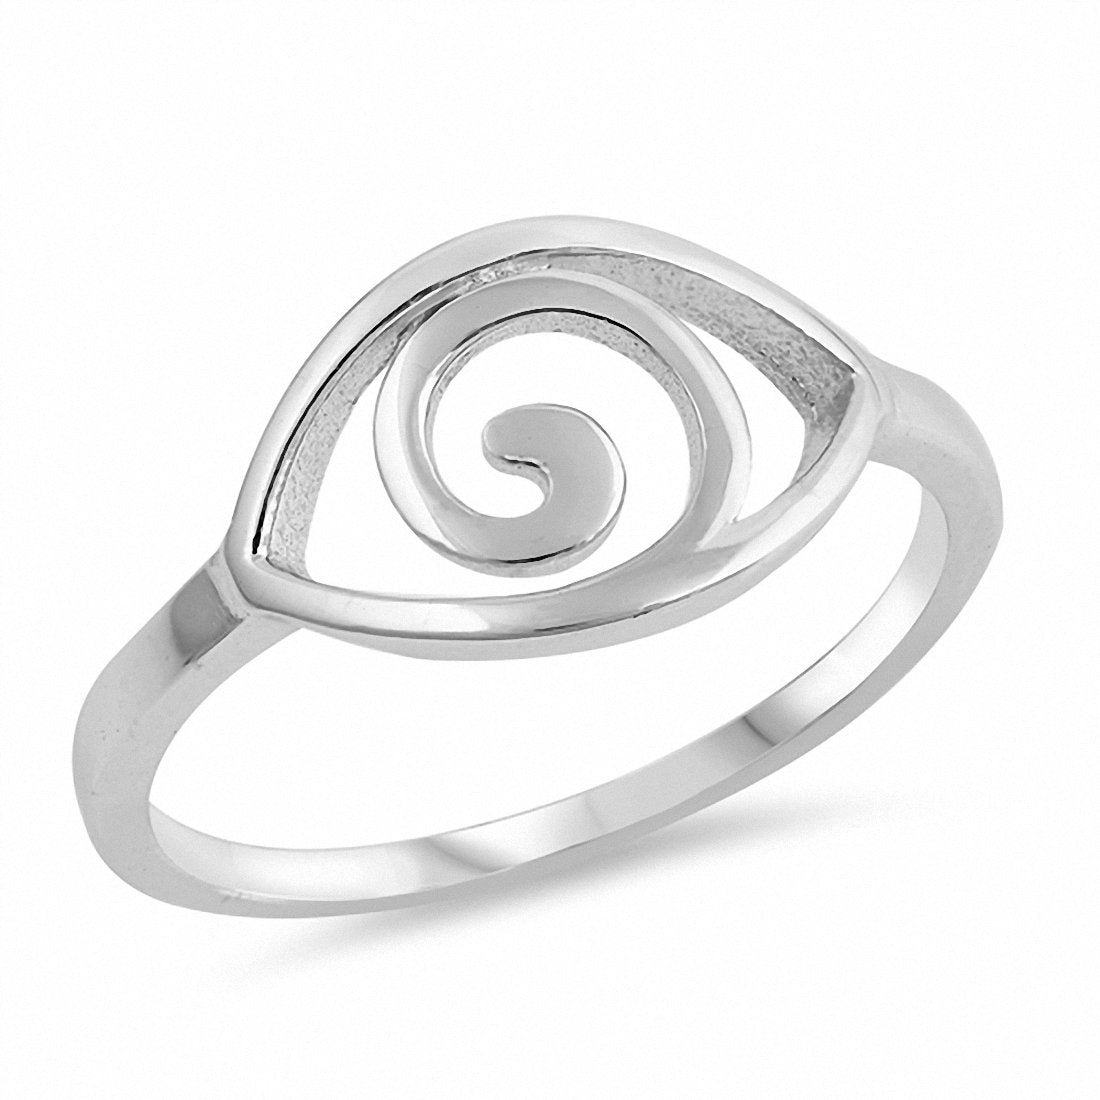 Spiral Eye Ring Band 925 Sterling Silver Choose Color